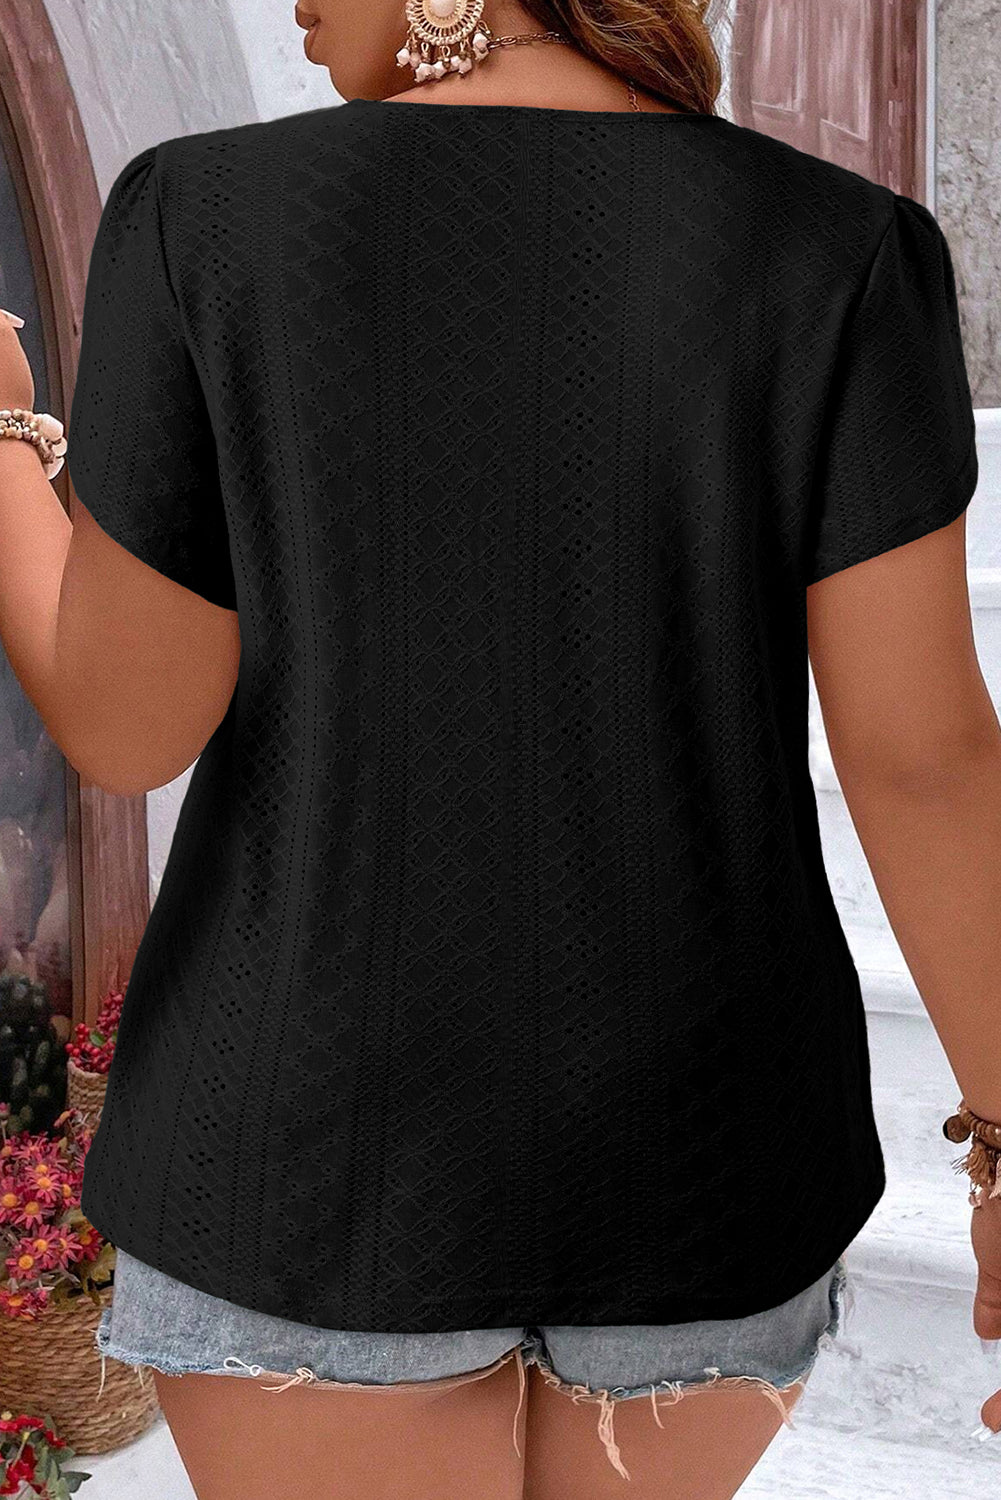 Black Guipure V Neck Plus Size Eyelet Embroidered Top - Scarlett's Riverside Boutique 